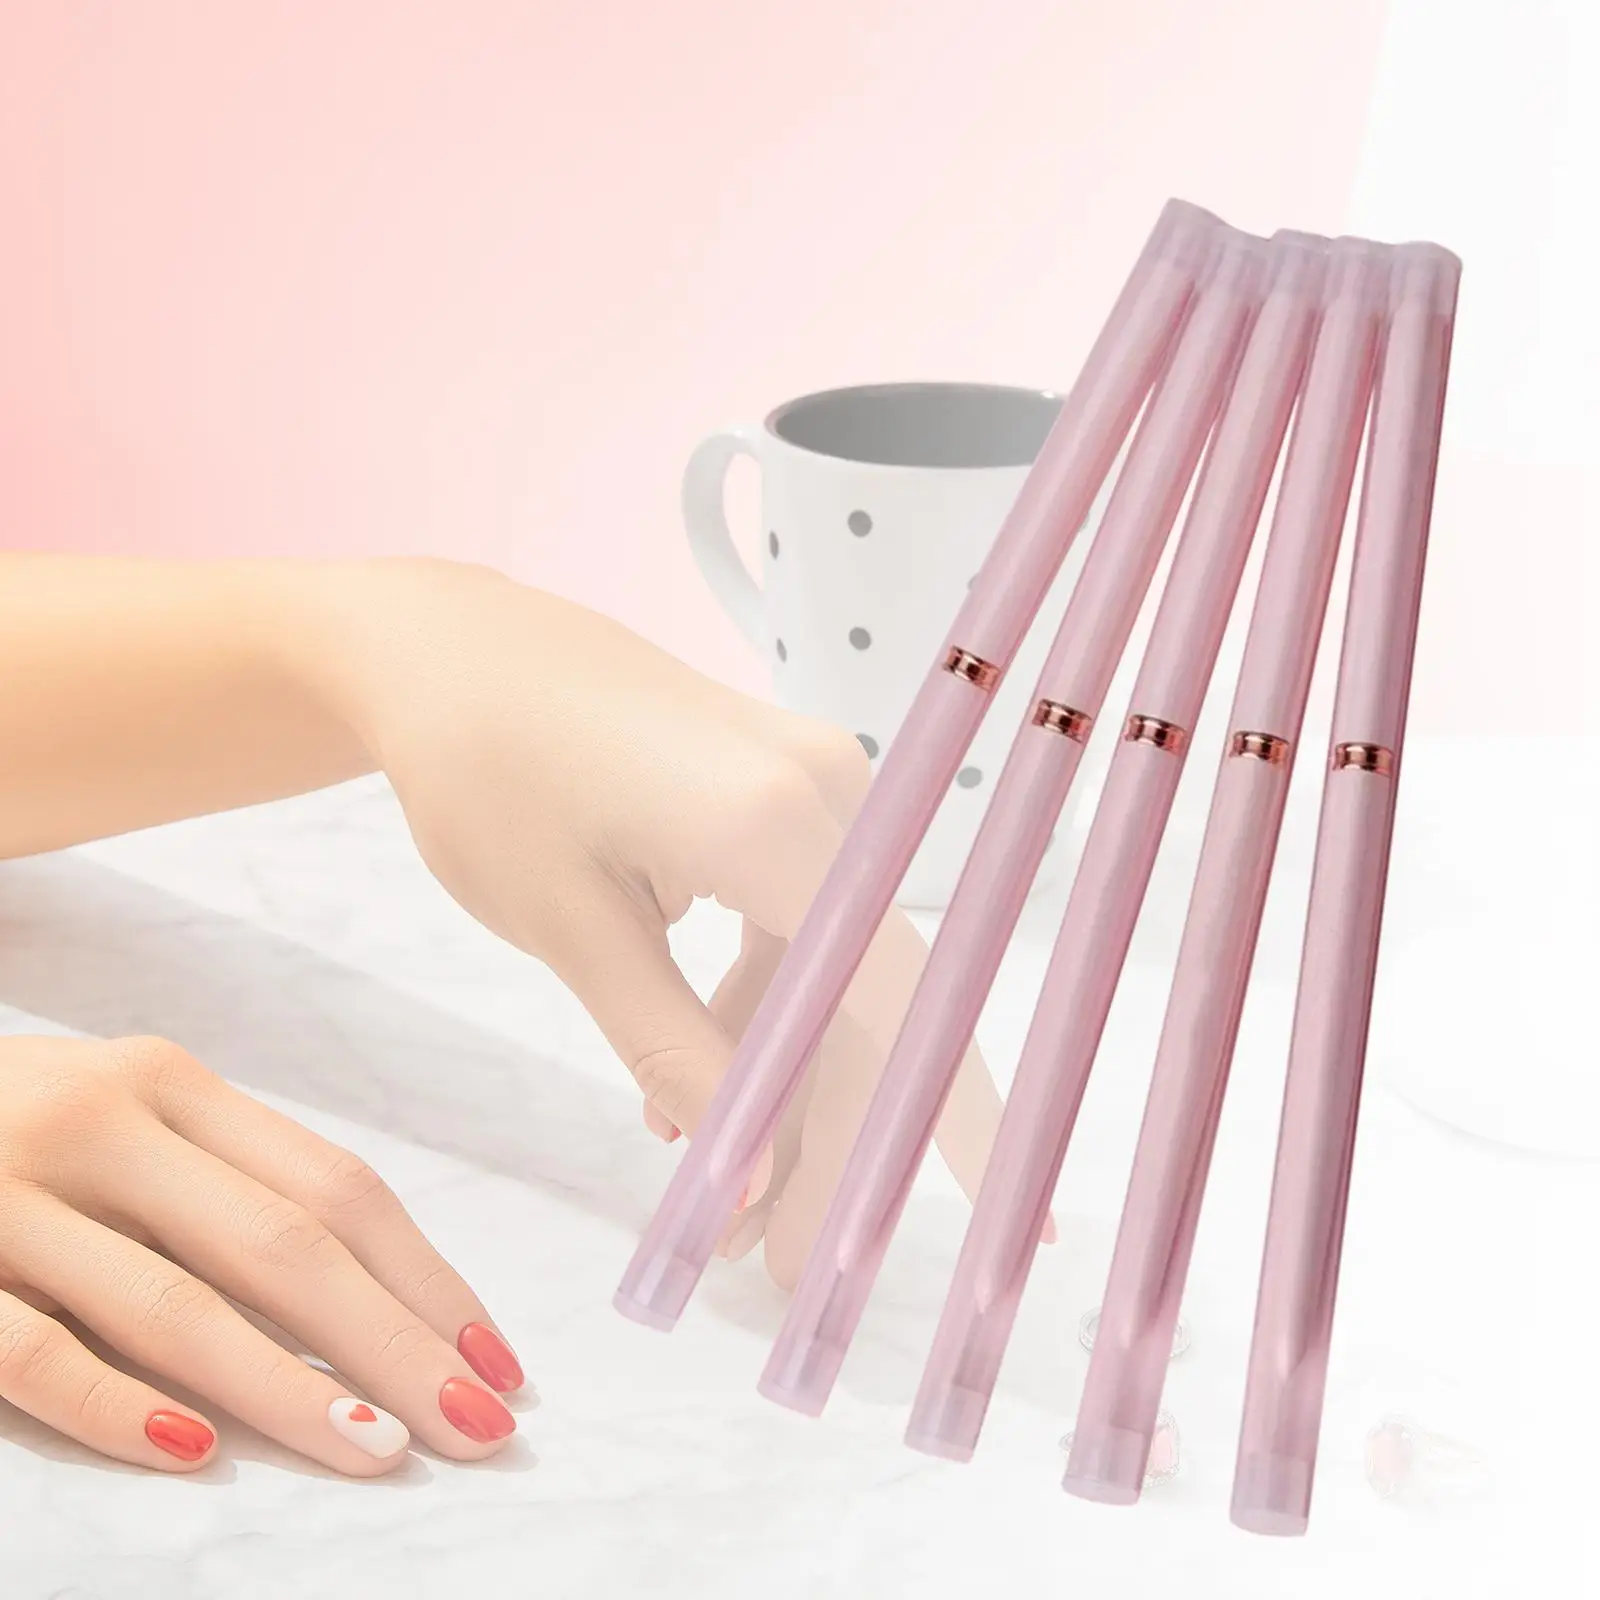 5Pcs Nail Art Liner Brush for Nail Art Design Brushes Tool Elongated Lines